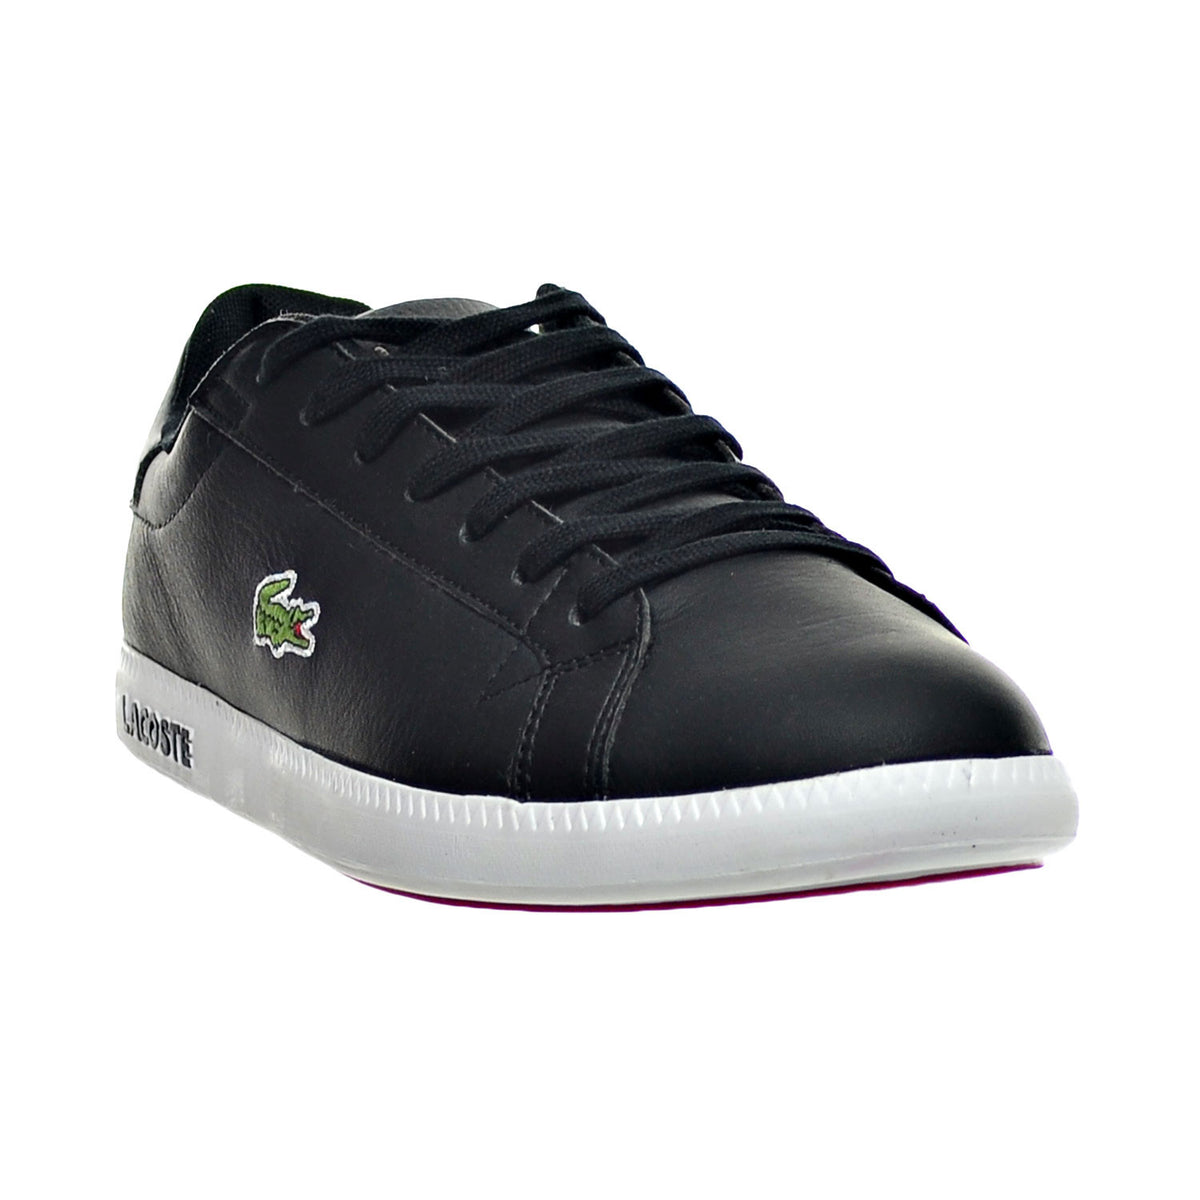 Graduate LCR3 Leather/Synthetic Men's Shoe Black/White